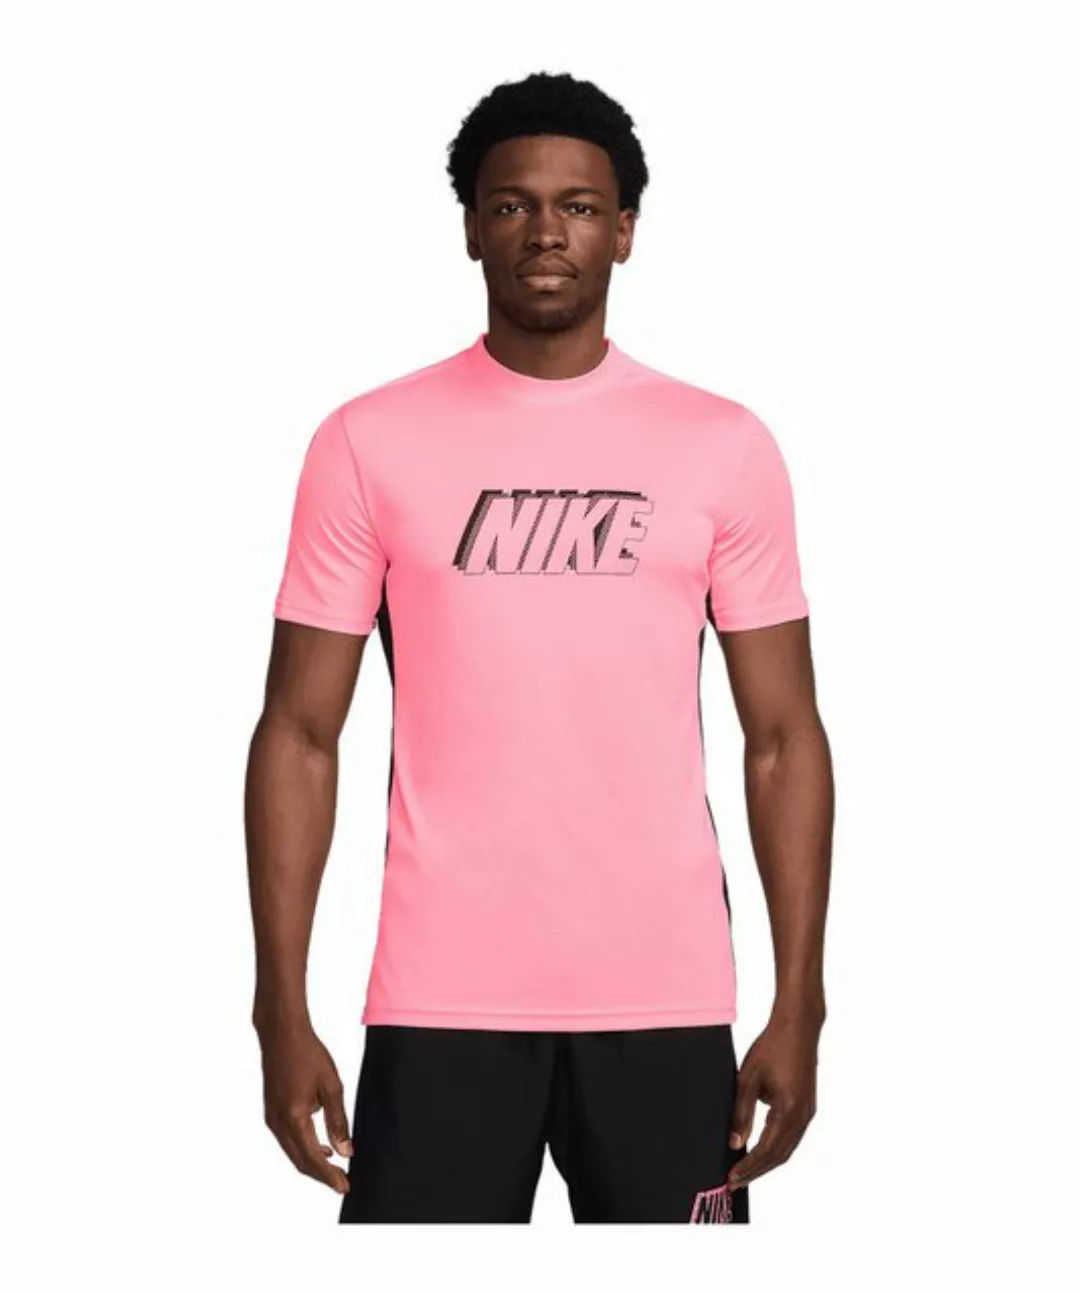 Nike T-Shirt Culture of Football Trainingsshirt default günstig online kaufen